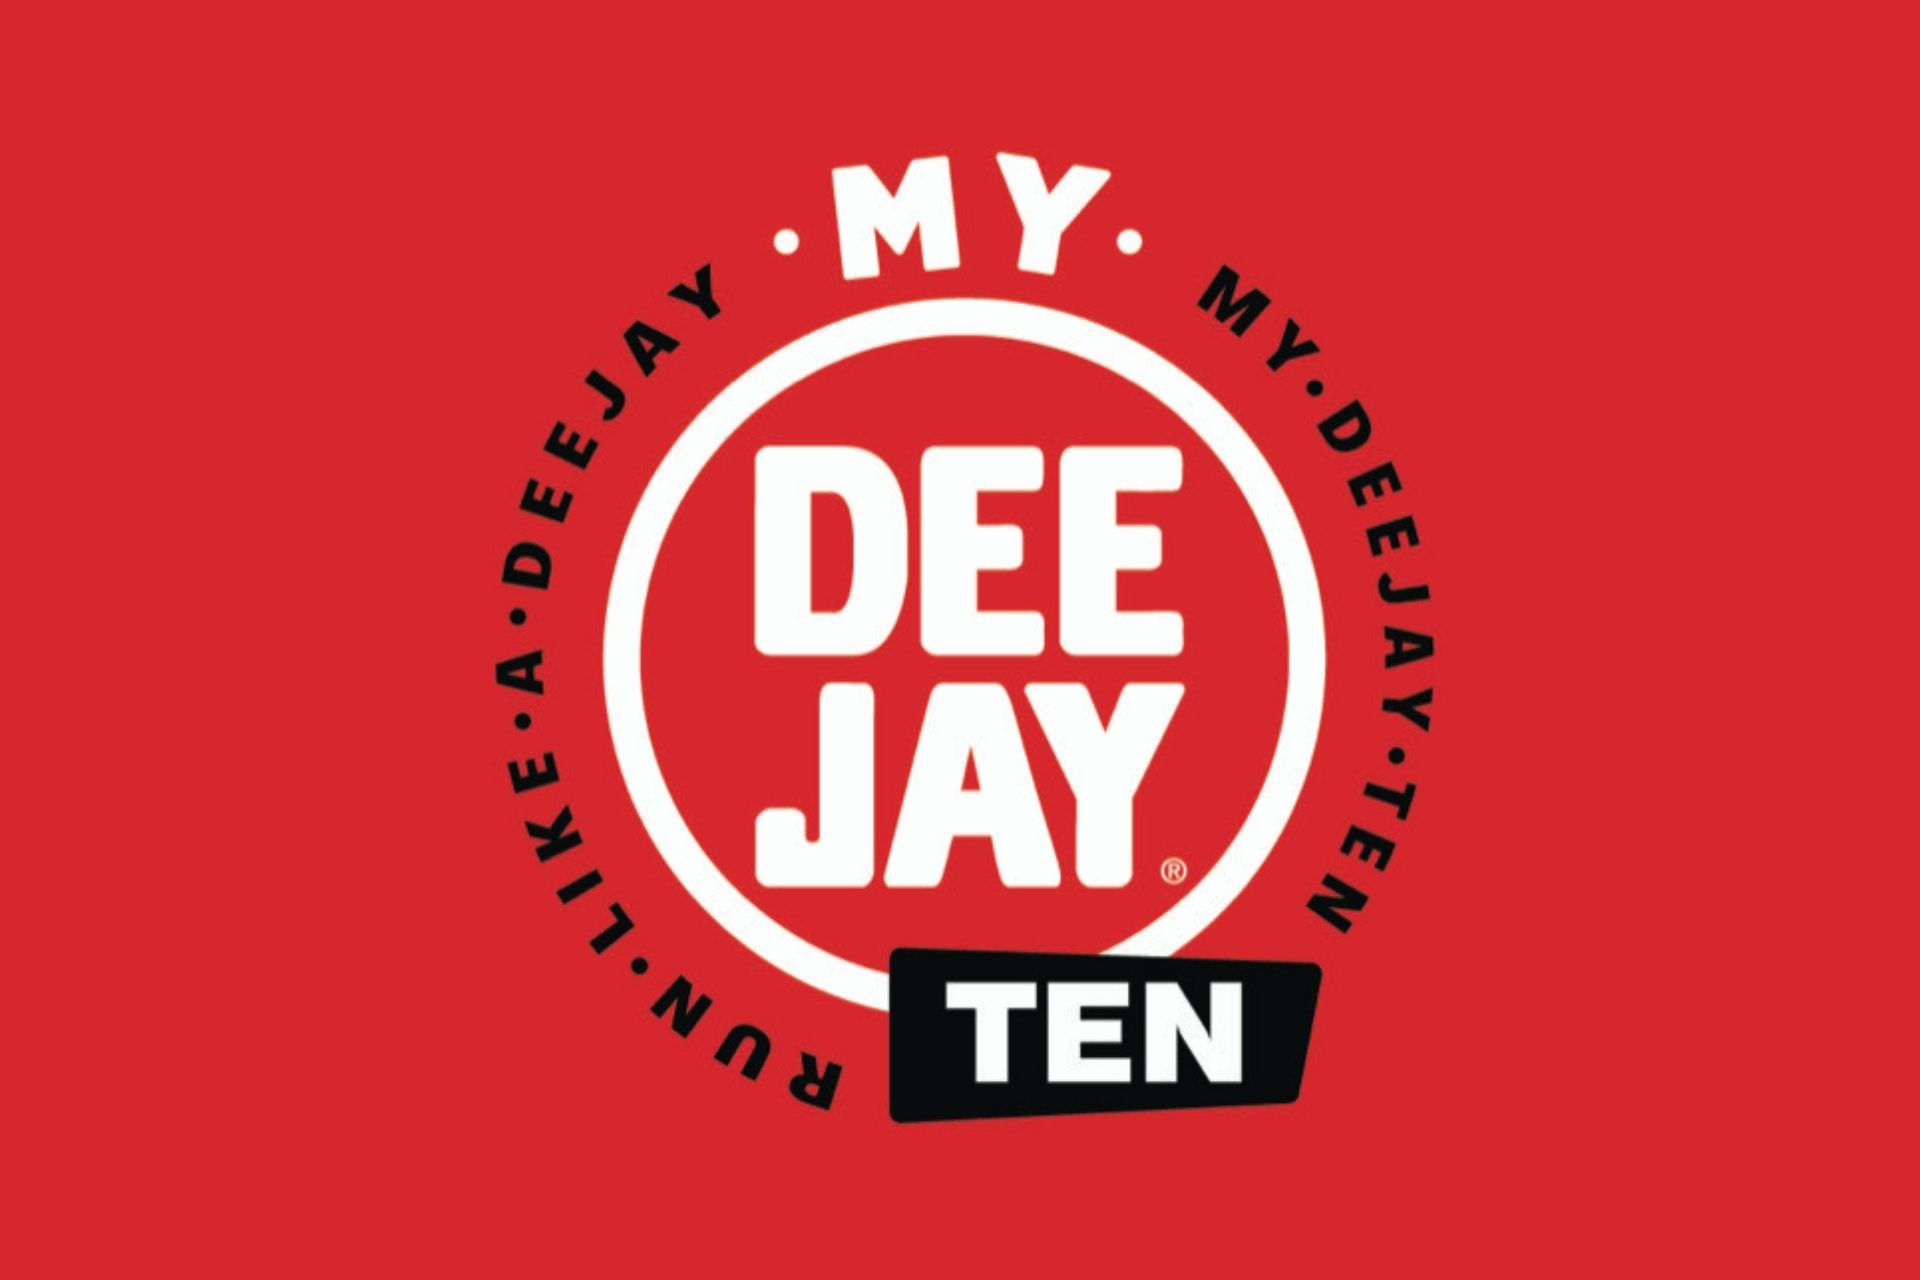 Deejay Ten